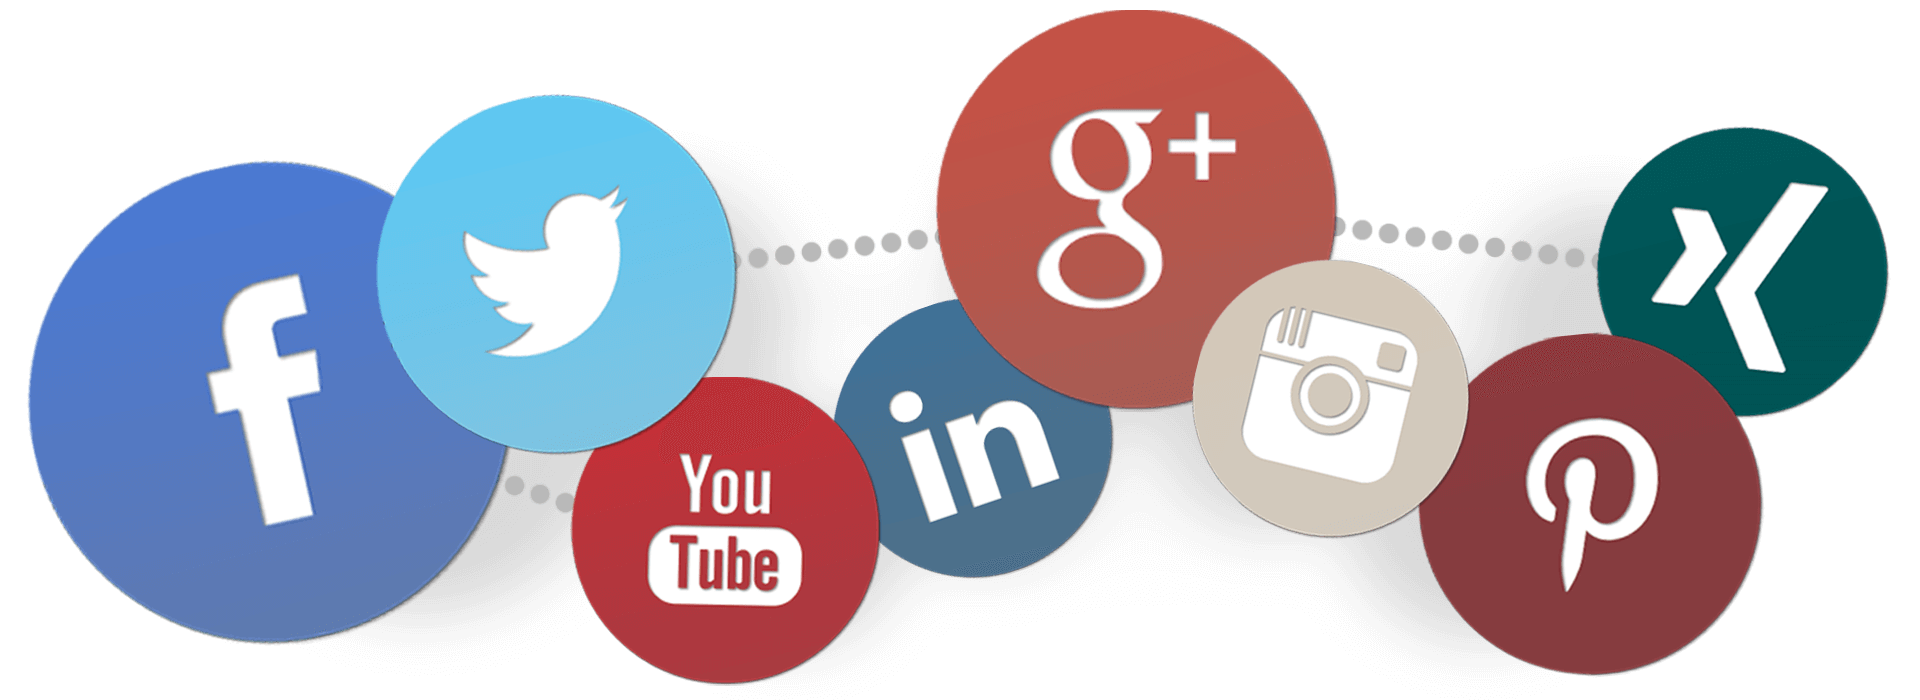 Unsere Referenzen im Bereich Social-Media-Marketing und Social-Media-Optimizing - kurz SMM/SMO